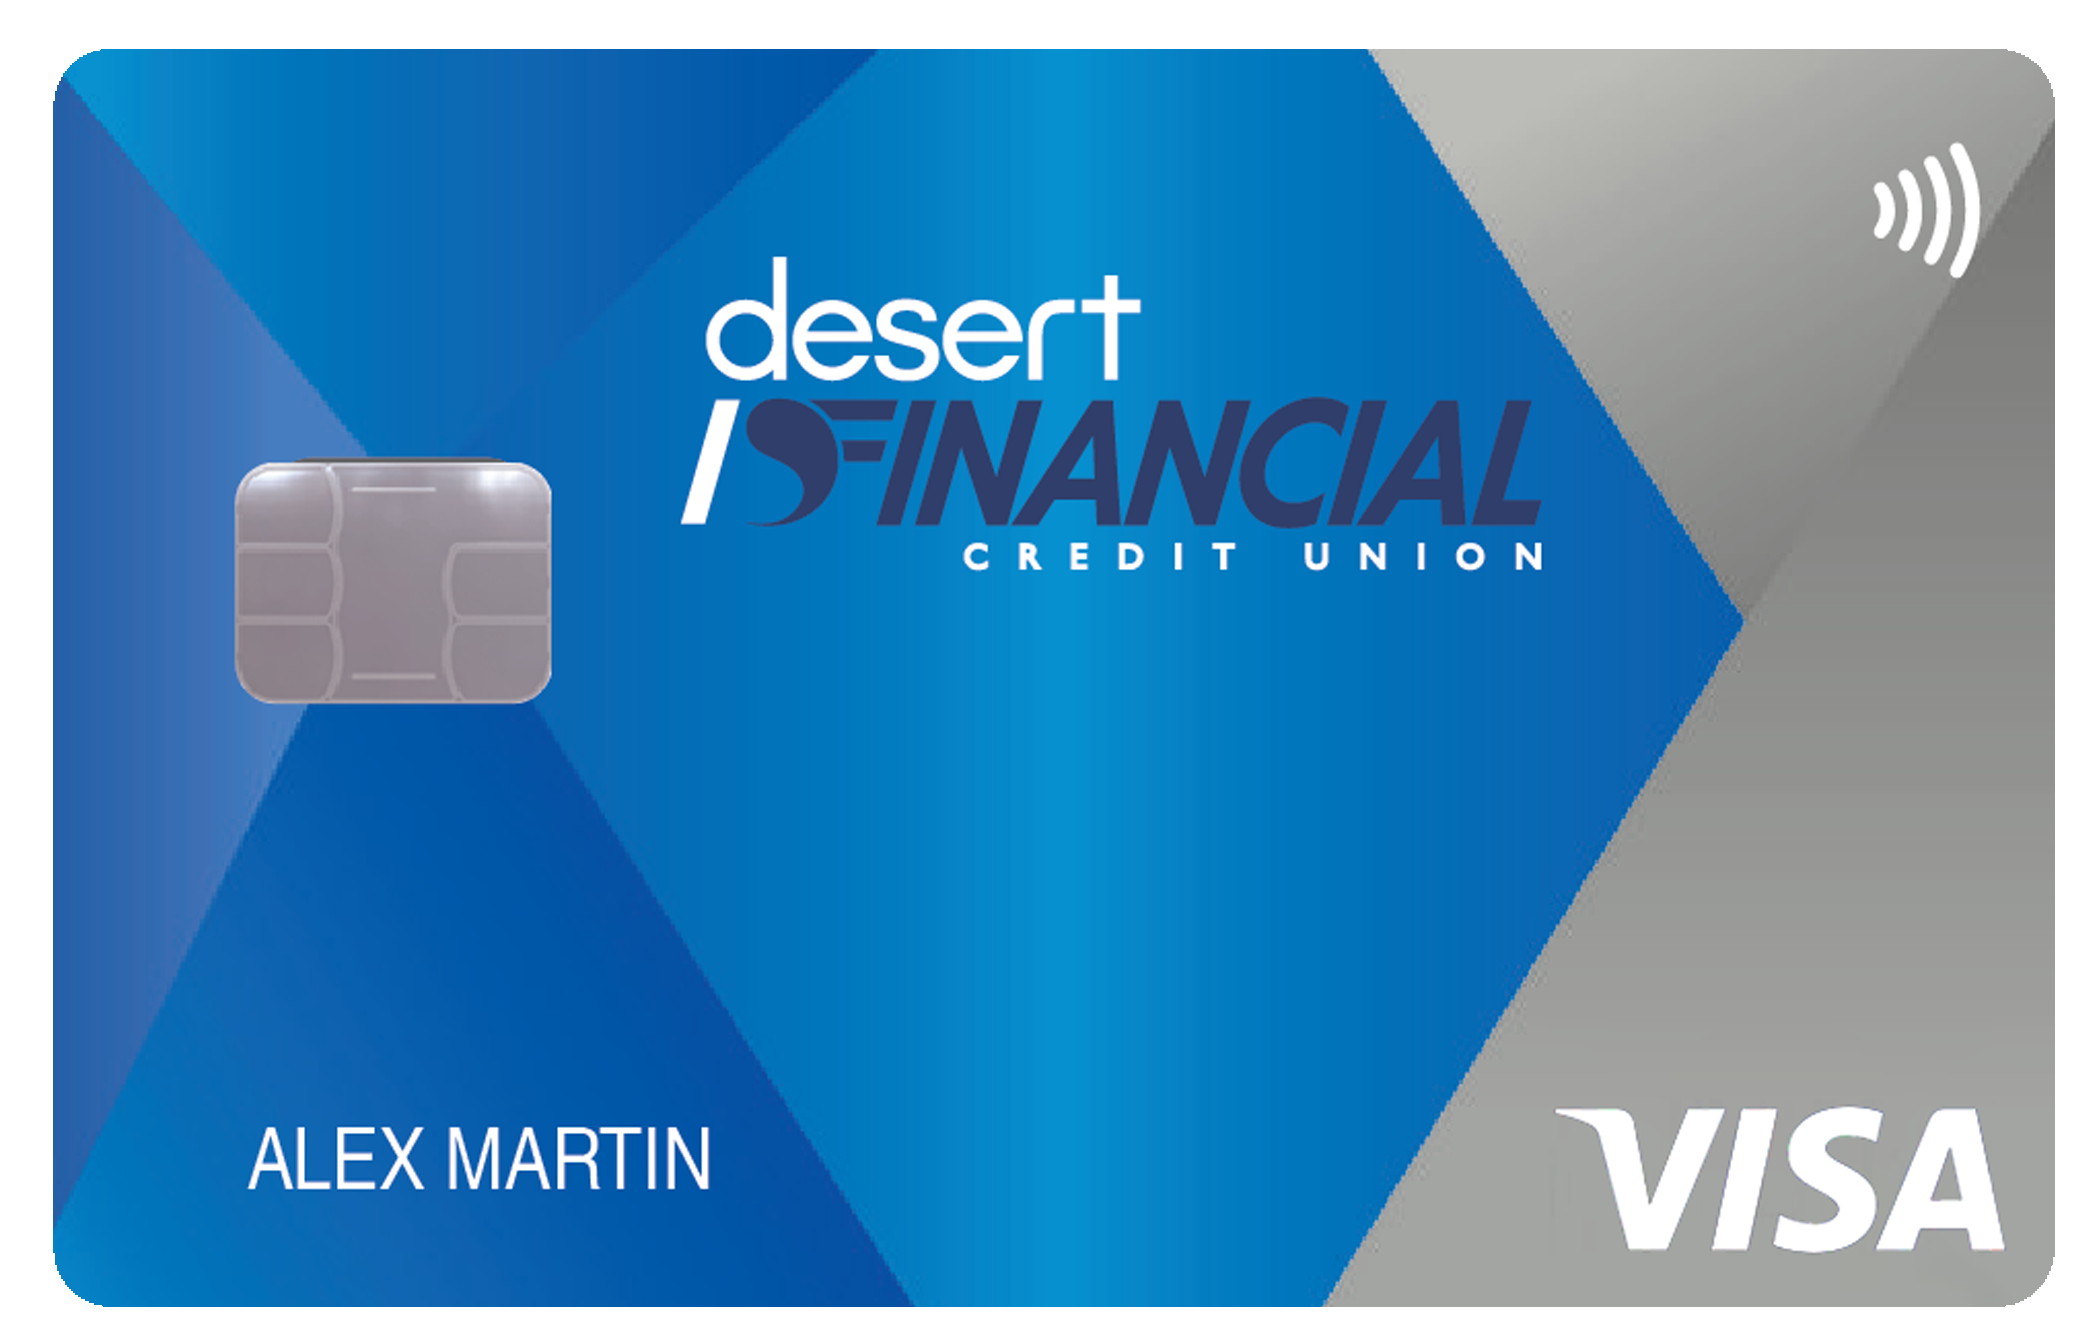 Desert Financial Credit Union Platinum Card